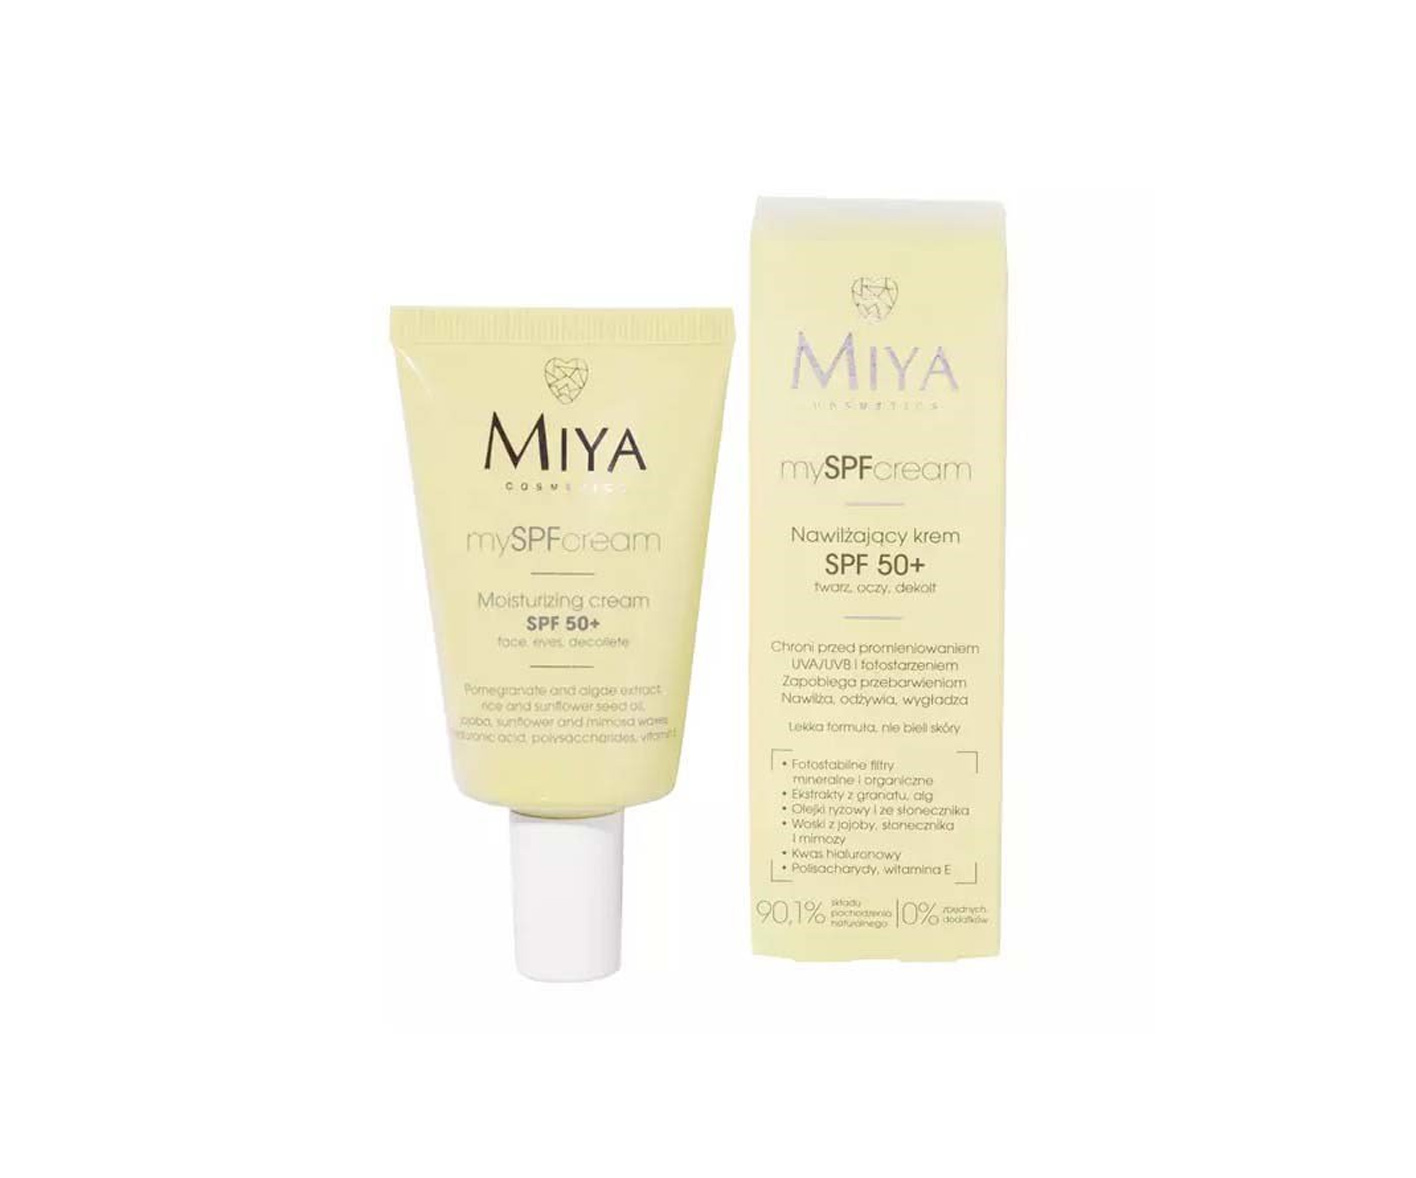 Miya, mySPFcream Face Sunscreen, krem do twarzy SPF 50